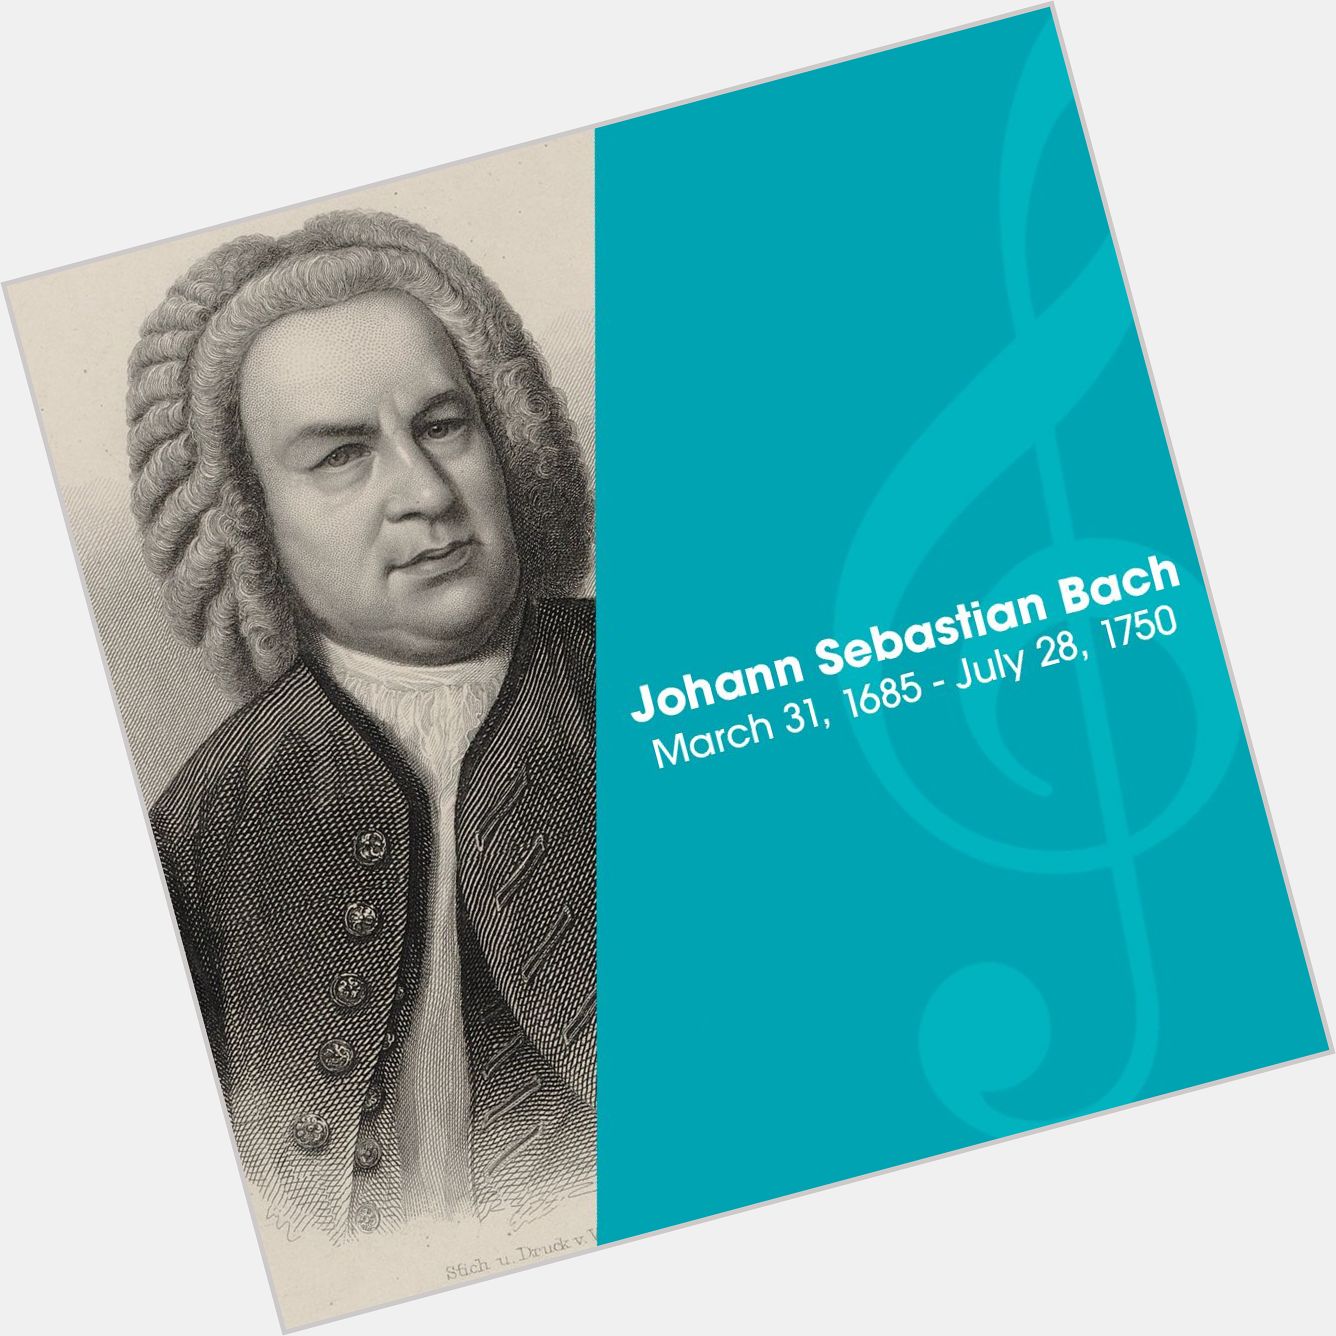 Happy birthday Johann Sebastian Bach! 